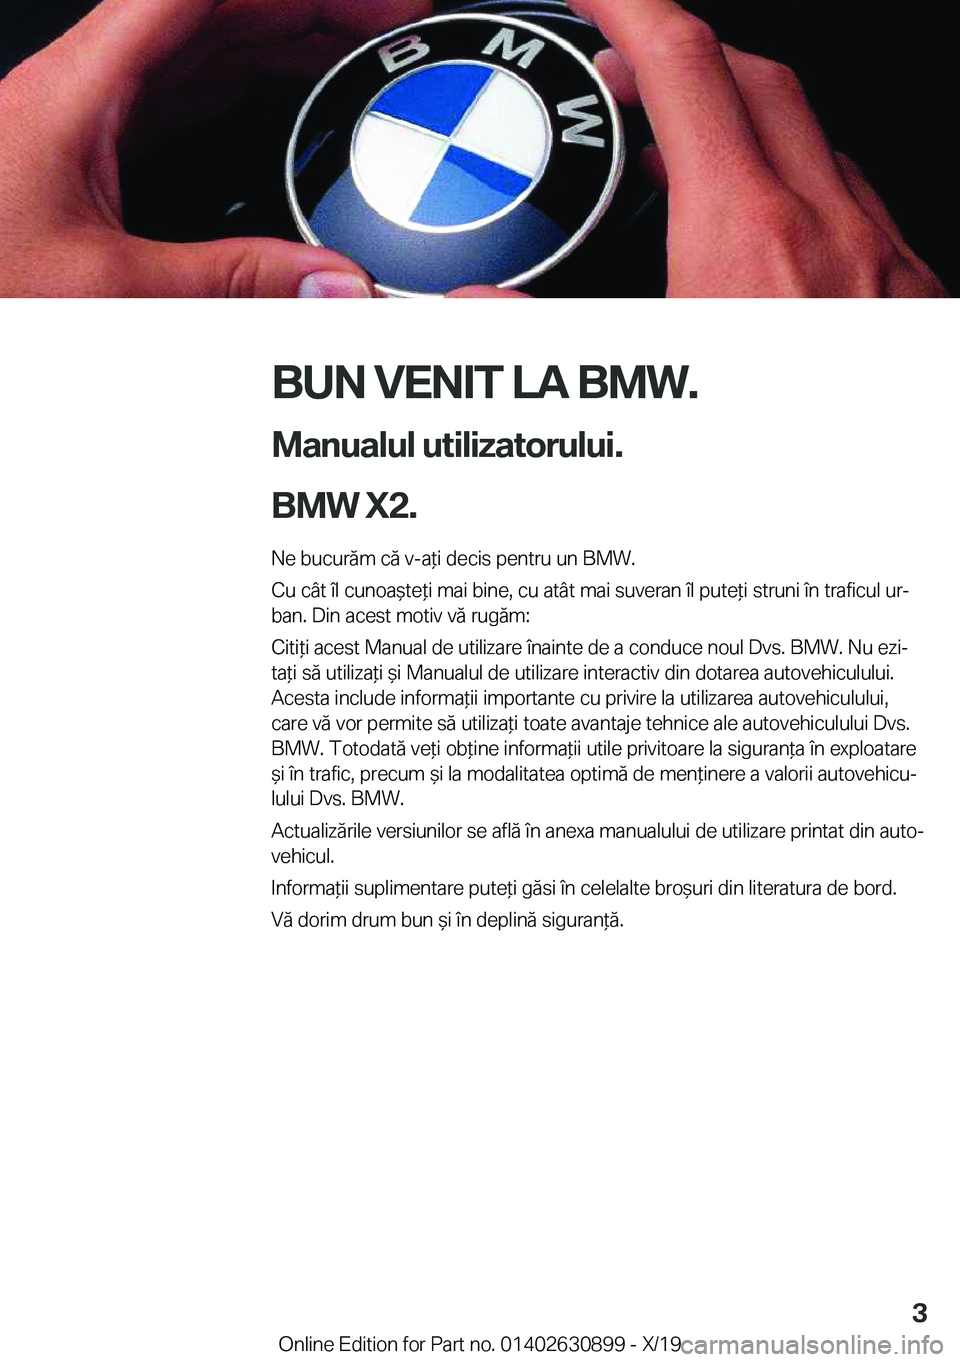 BMW X2 2020  Ghiduri De Utilizare (in Romanian) �B�U�N��V�E�N�I�T��L�A��B�M�W�.�M�a�n�u�a�l�u�l��u�t�i�l�i�z�a�t�o�r�u�l�u�i�.
�B�M�W��X�2�. �N�e��b�u�c�u�r�